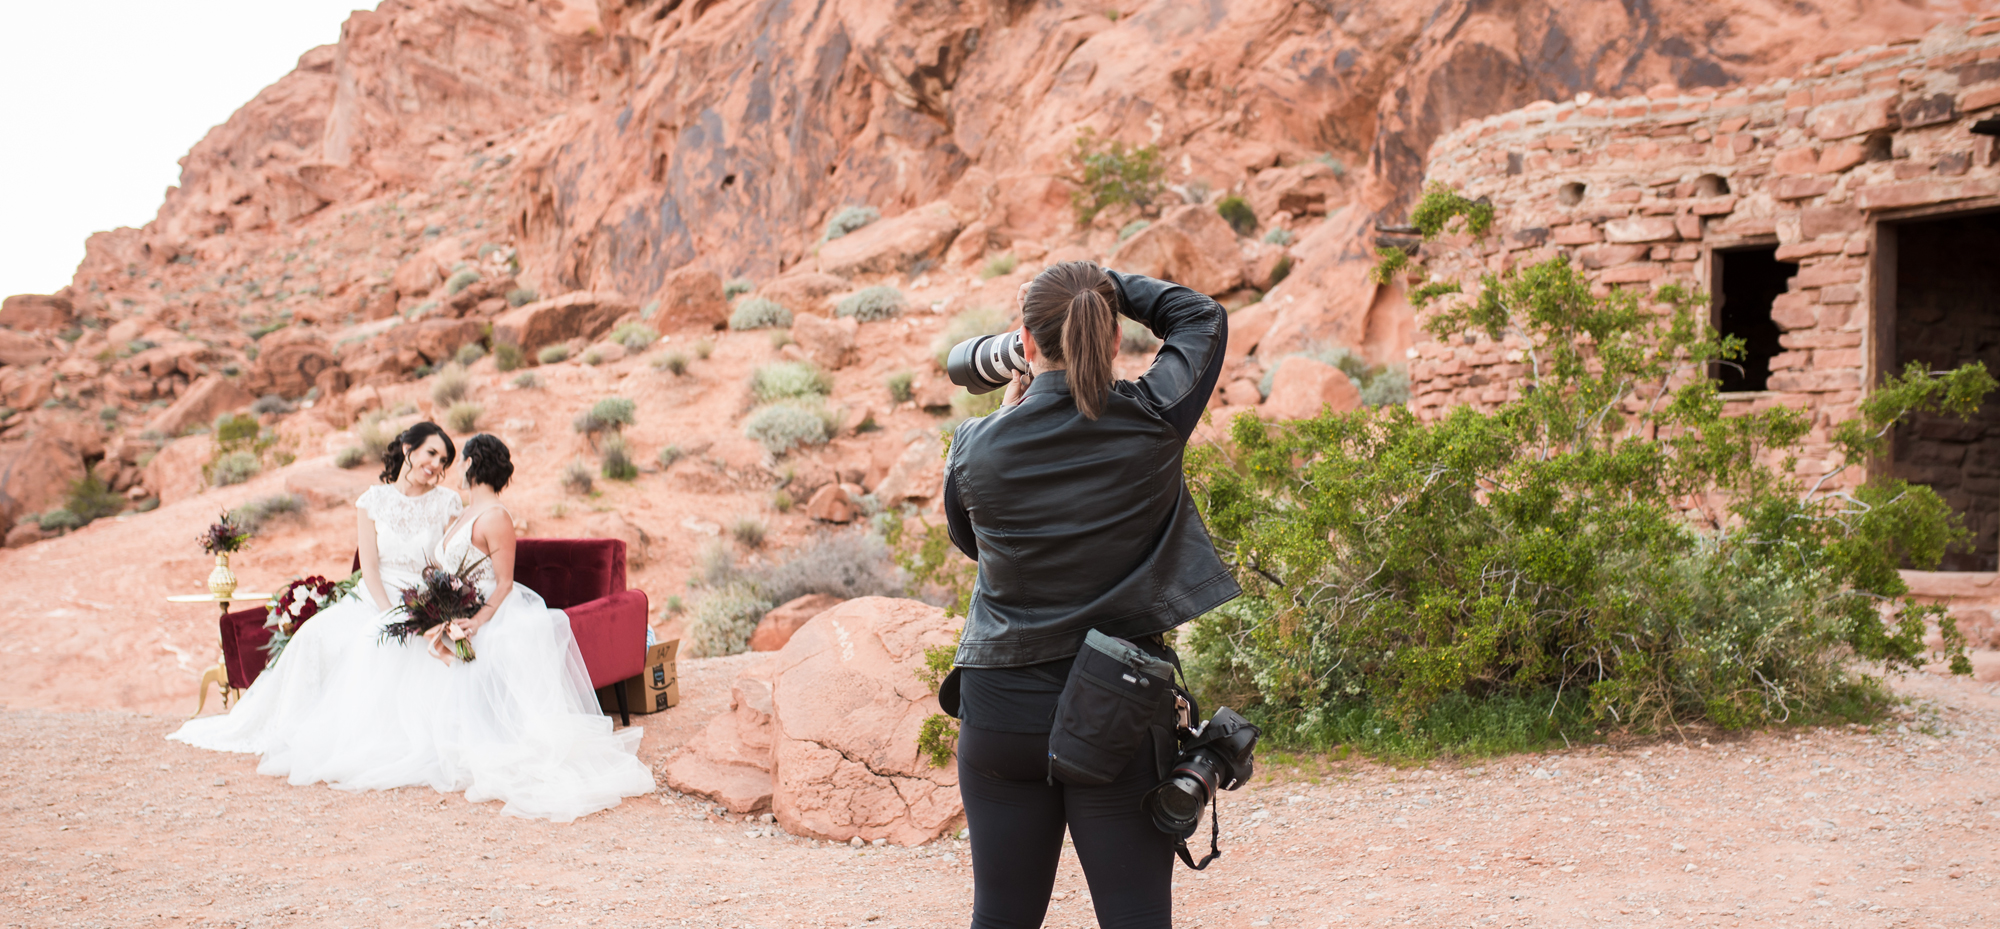 Finding a Great Las Vegas Wedding Photographer